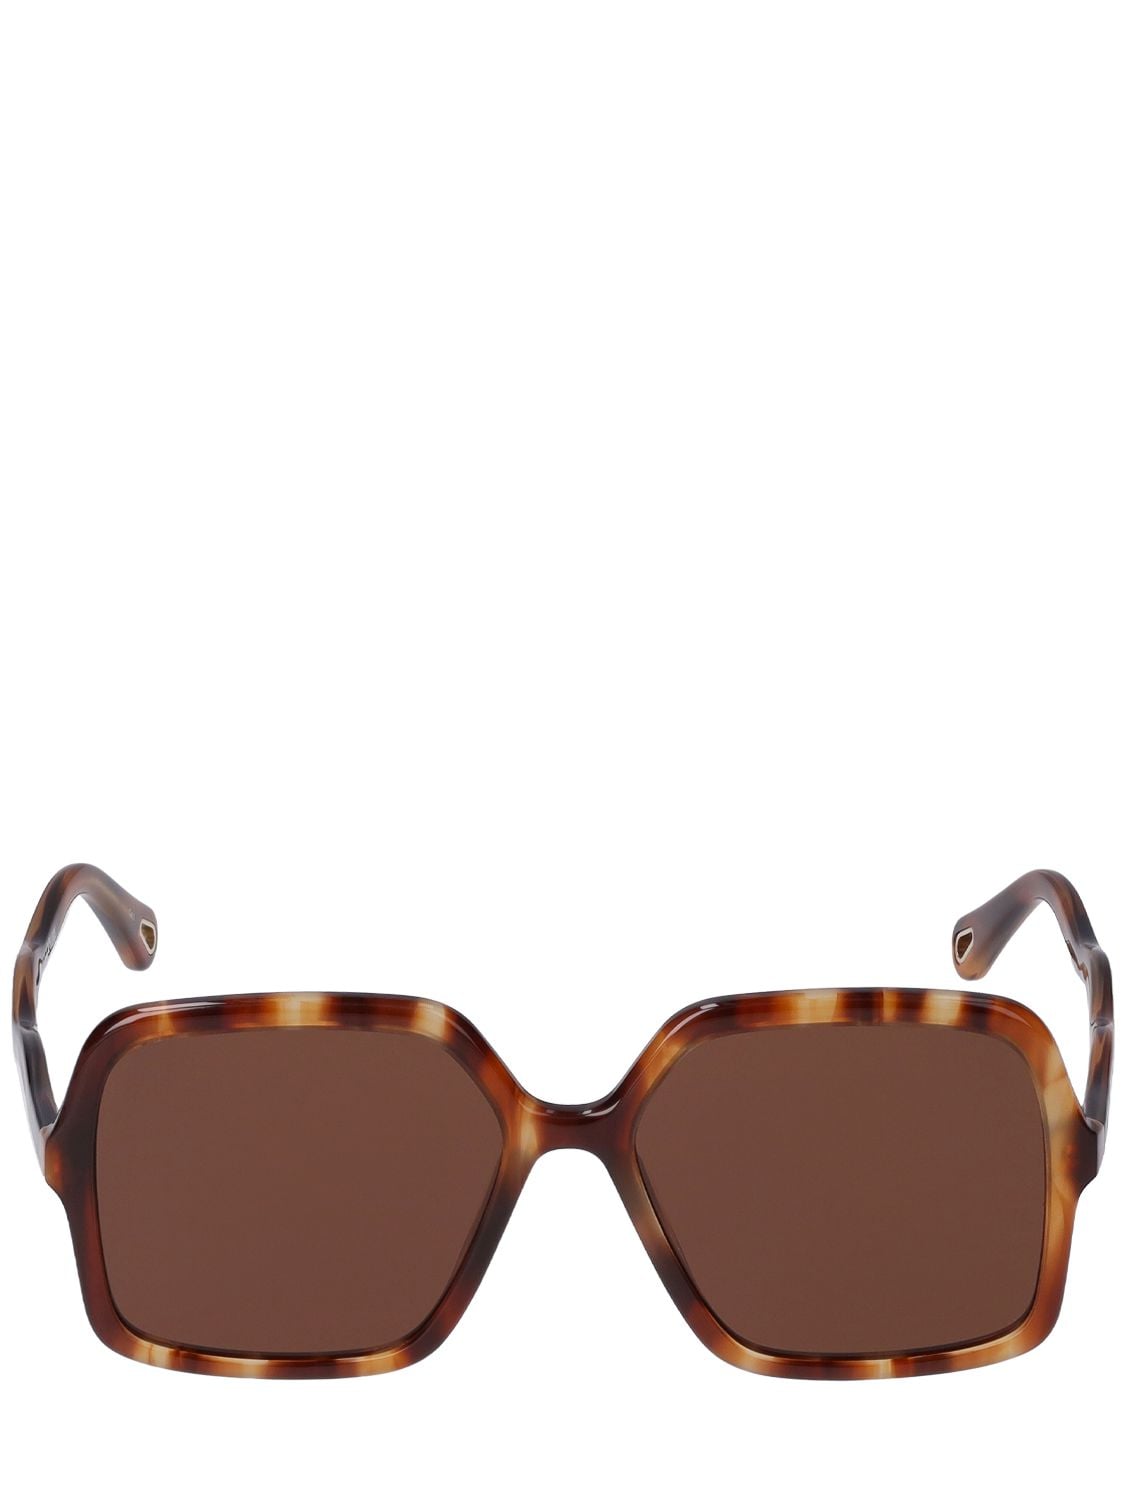 Image of Zelie Squared Acetate Sunglasses